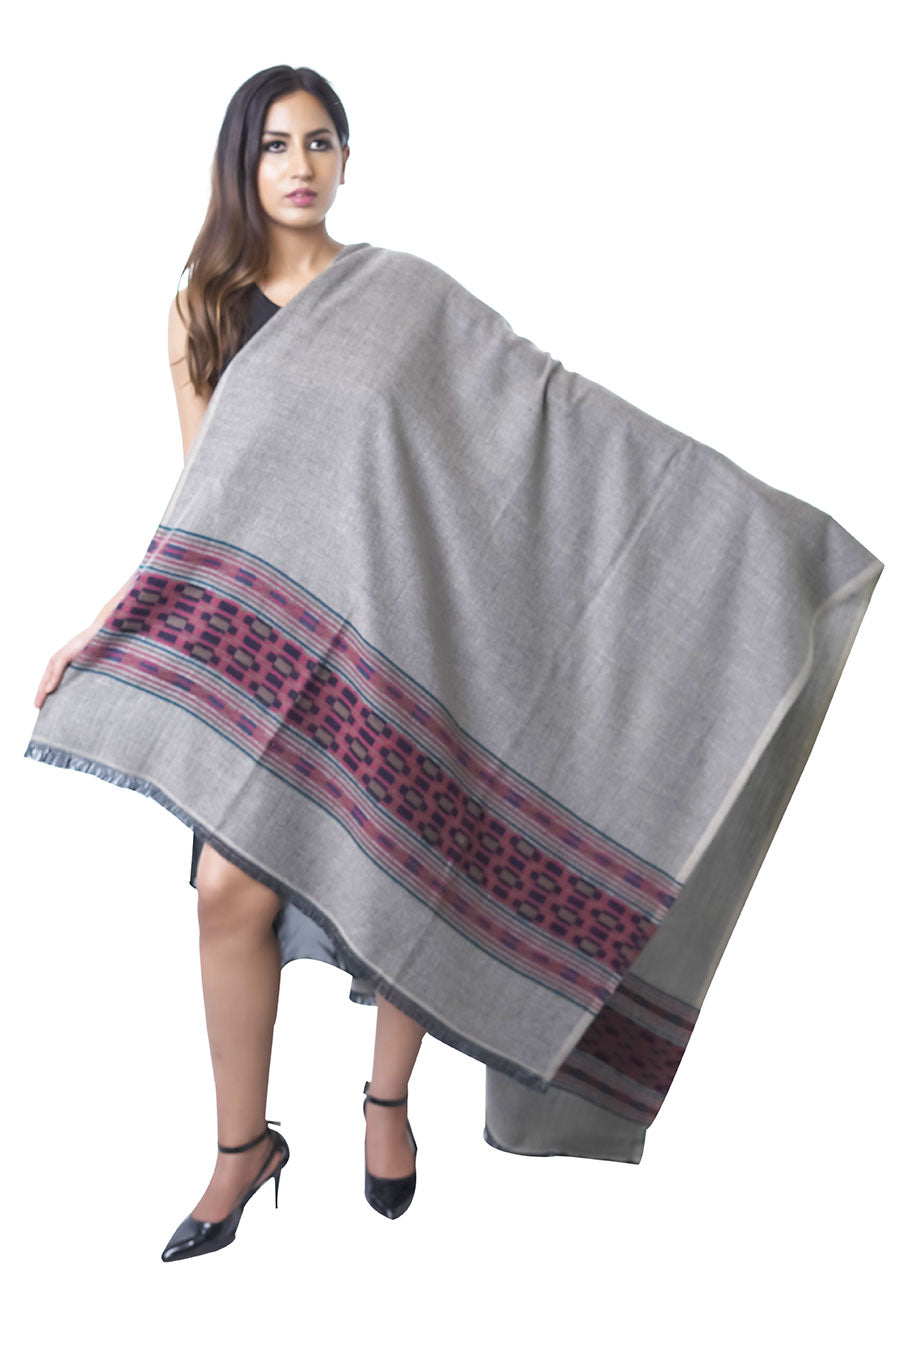 Kullu Design Woven Grey Woolen Shawl